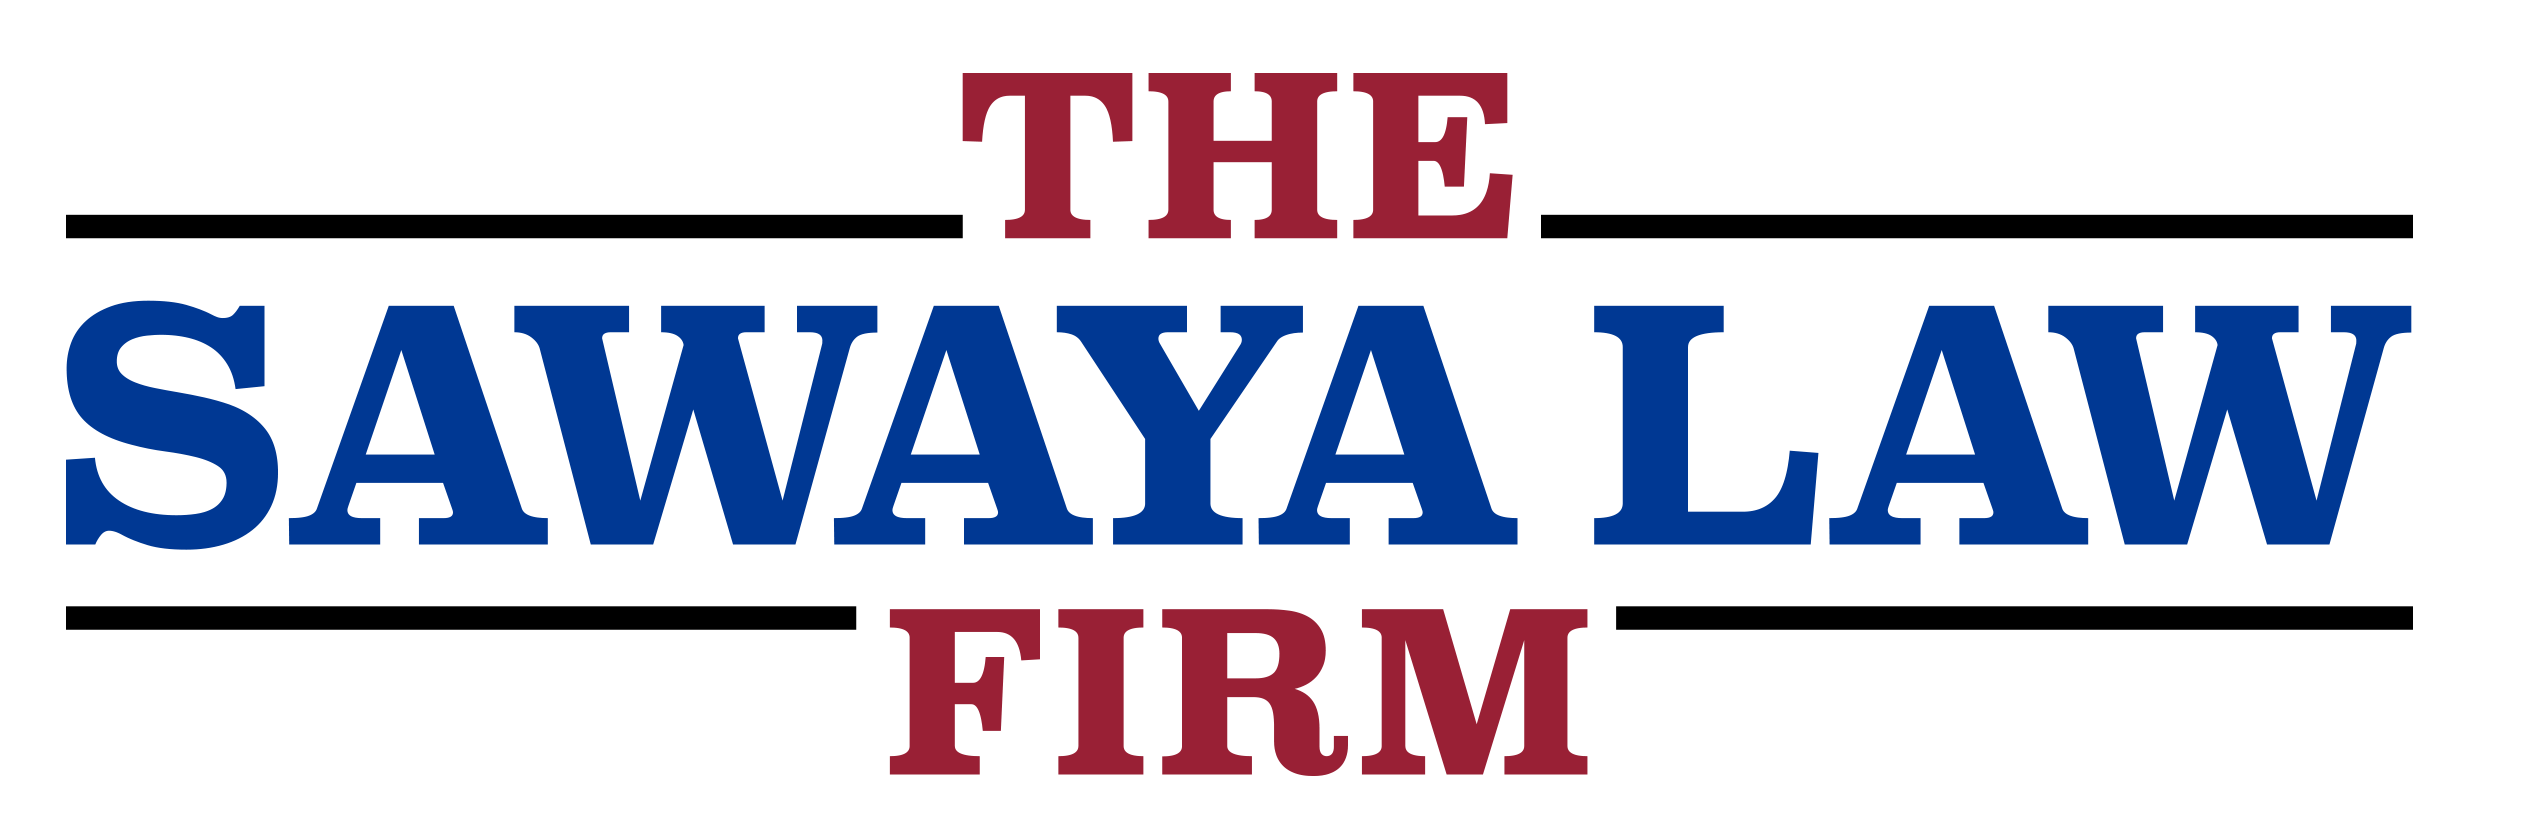 The Sawaya Law Firm